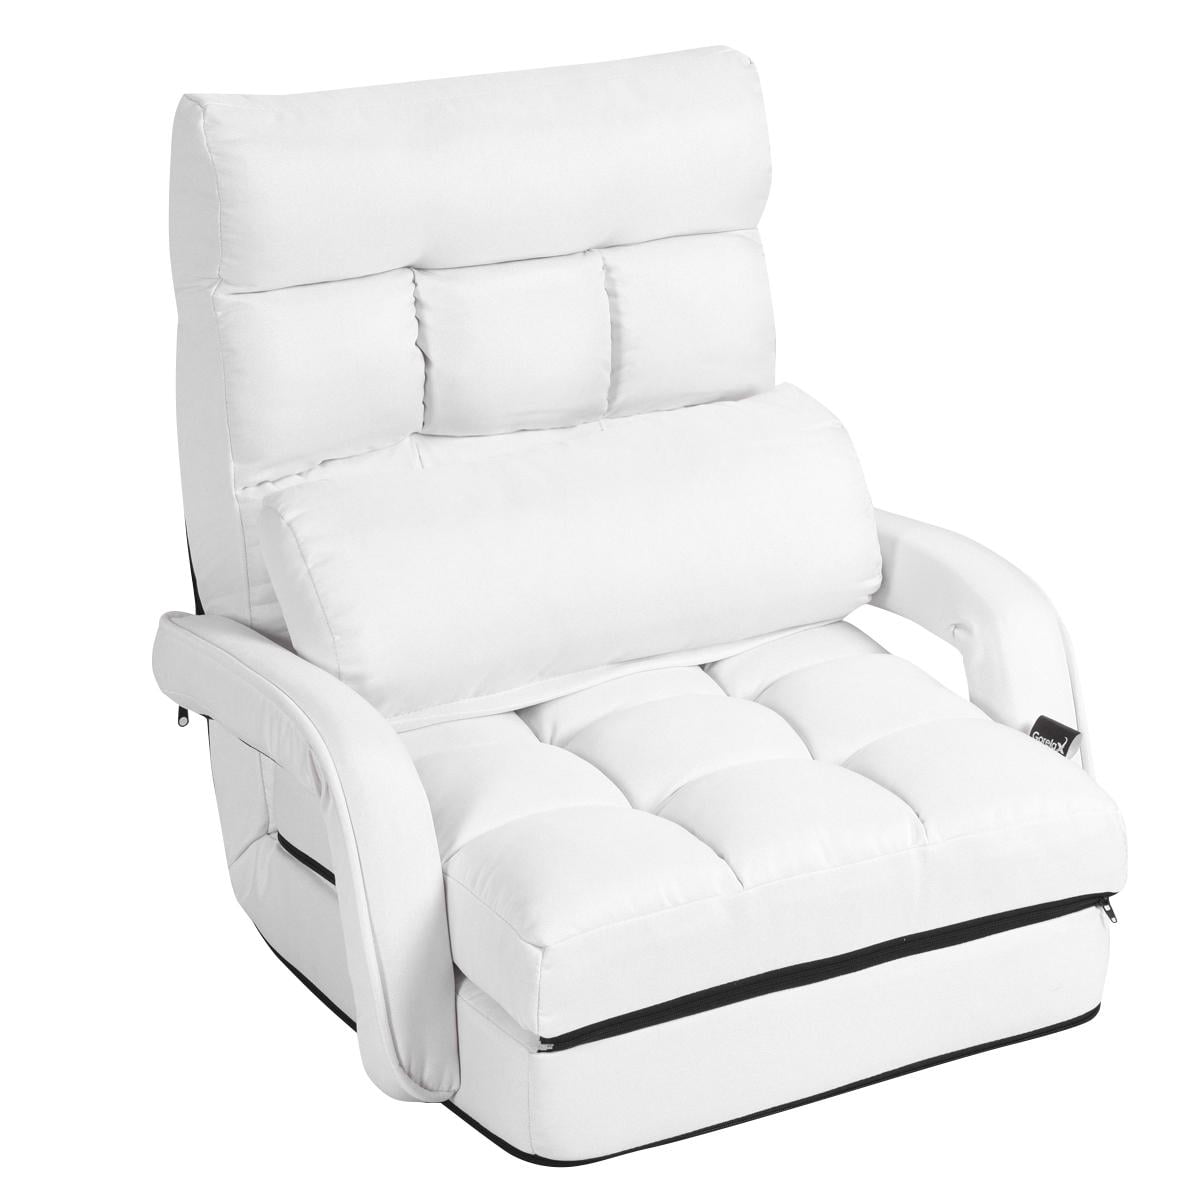 Chair PadsSponge Comfort and Softness Yoga Chairs Plane Seat